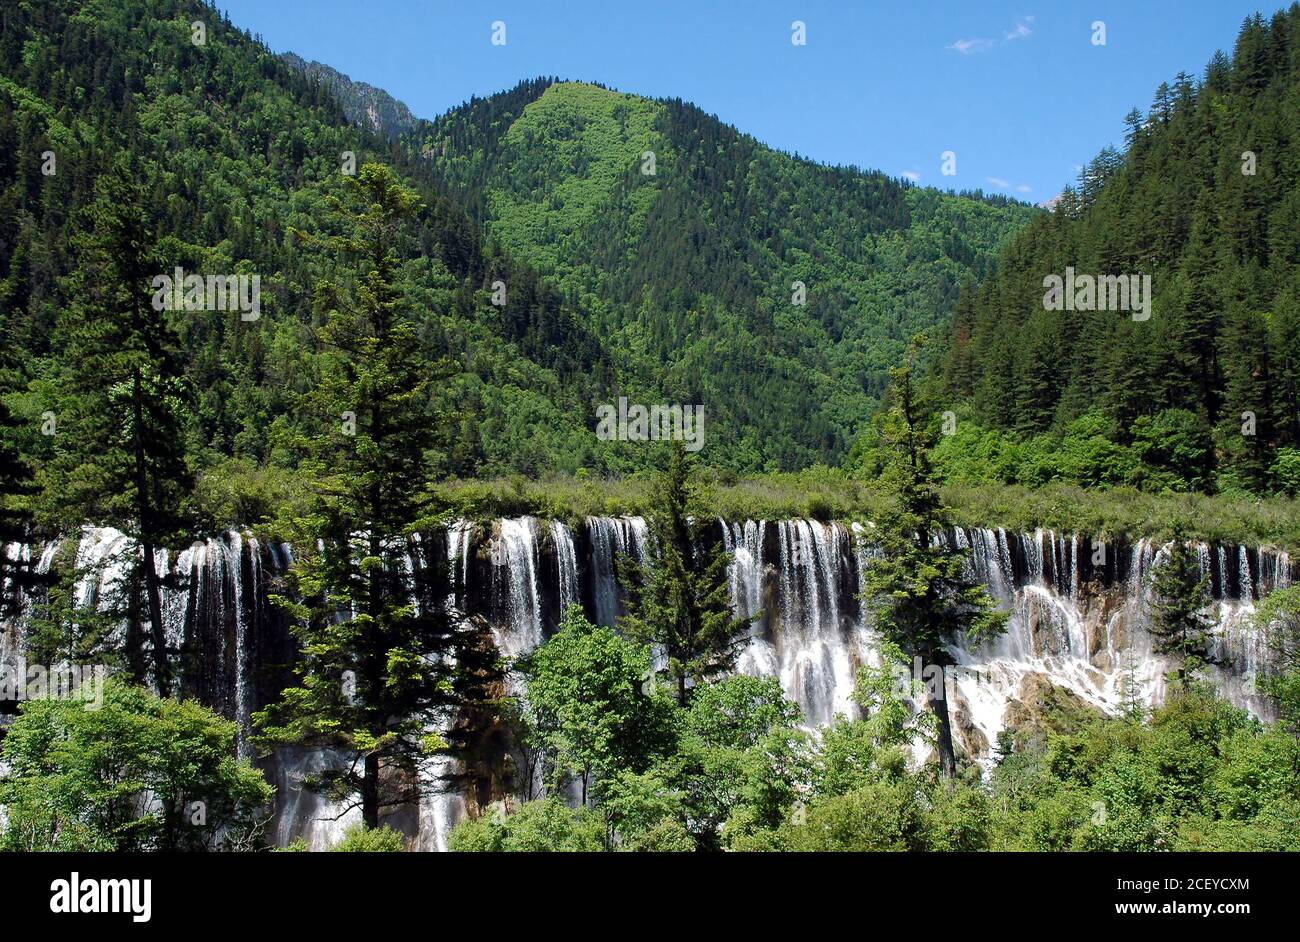 Juizhaigou (valle de nueve aldeas) en Sichuan, China. Vista de la cascada Nuorilang. Foto de stock